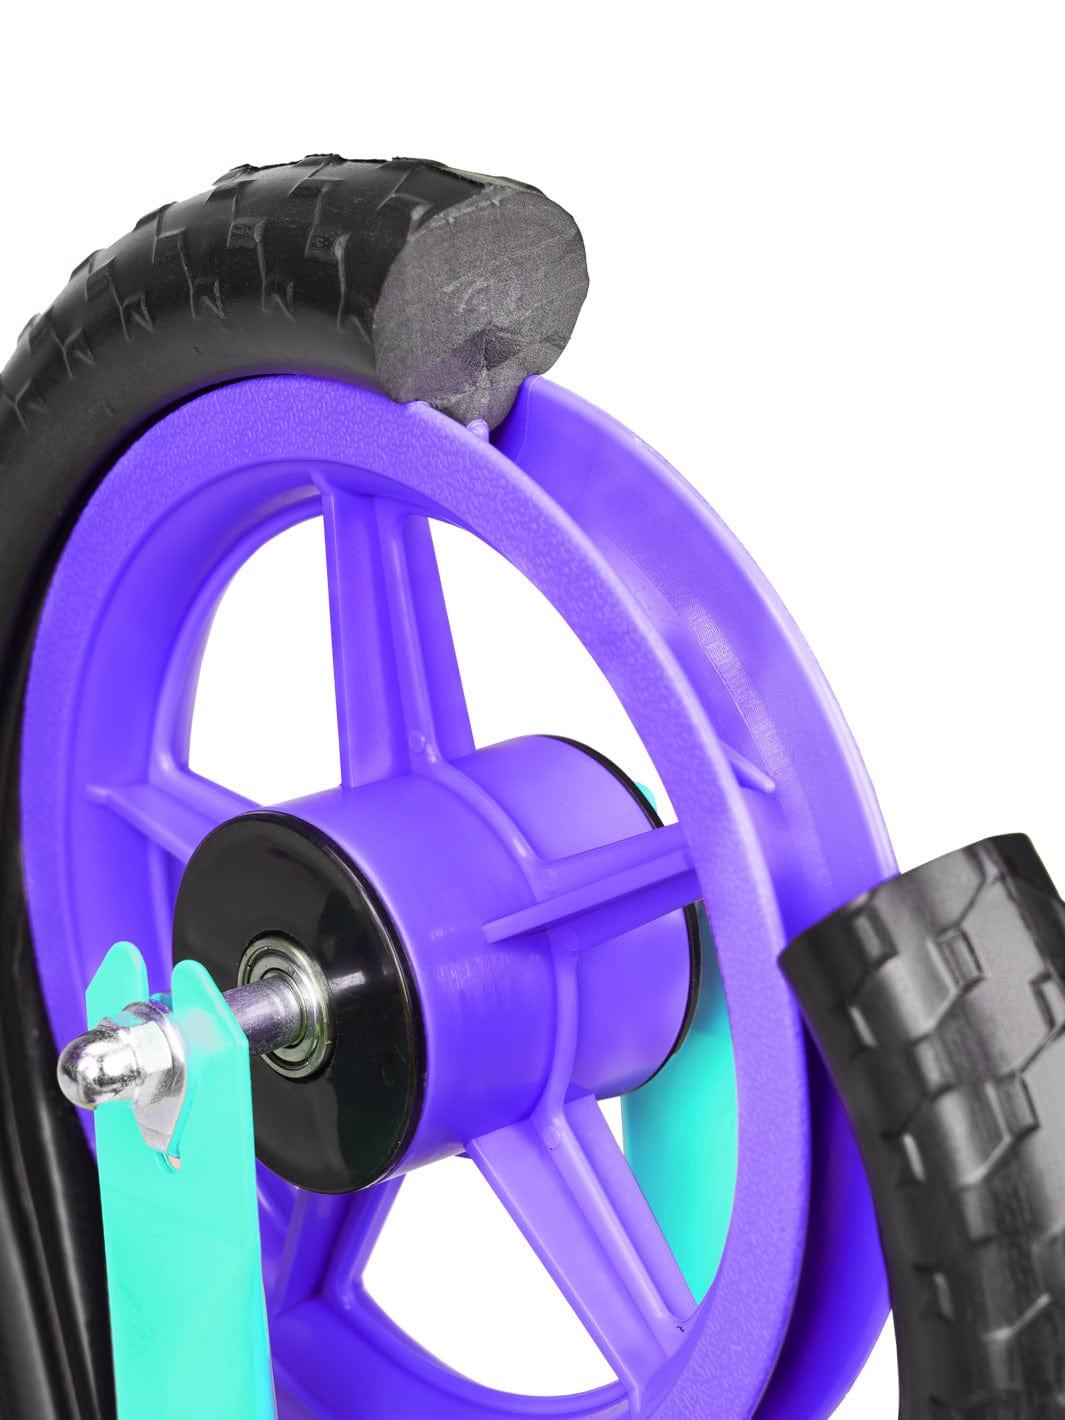 Zycom Light-Up Zbike & Helmet - Teal Purple - Madd Gear Global | Est 2002